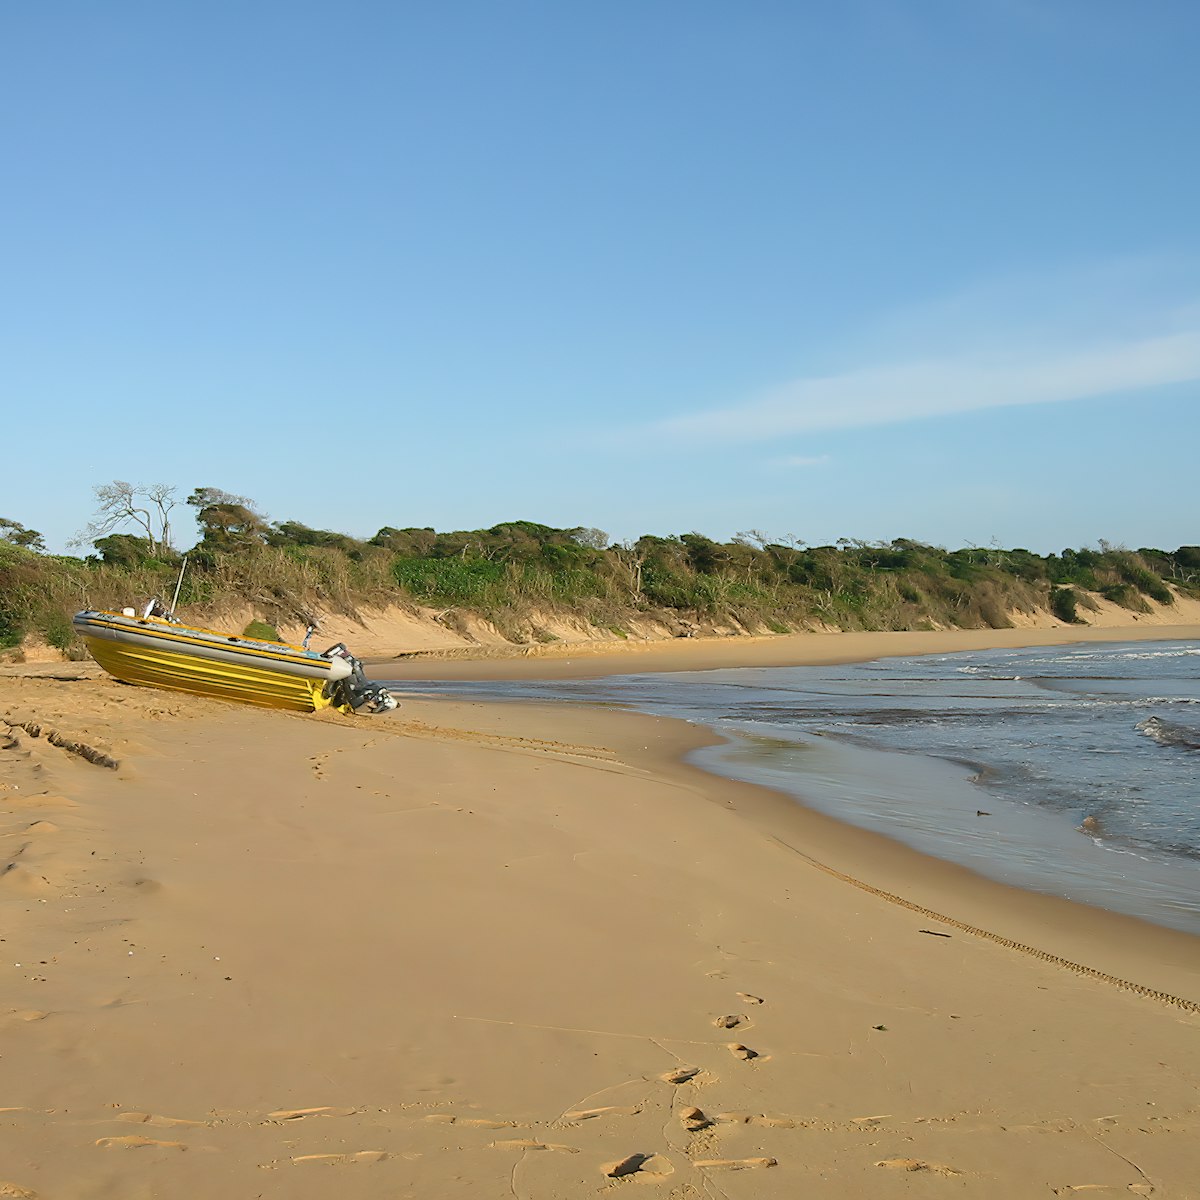 The remote coastline of Sodwana Bay in northern KwaZulu Natal, South Africa.